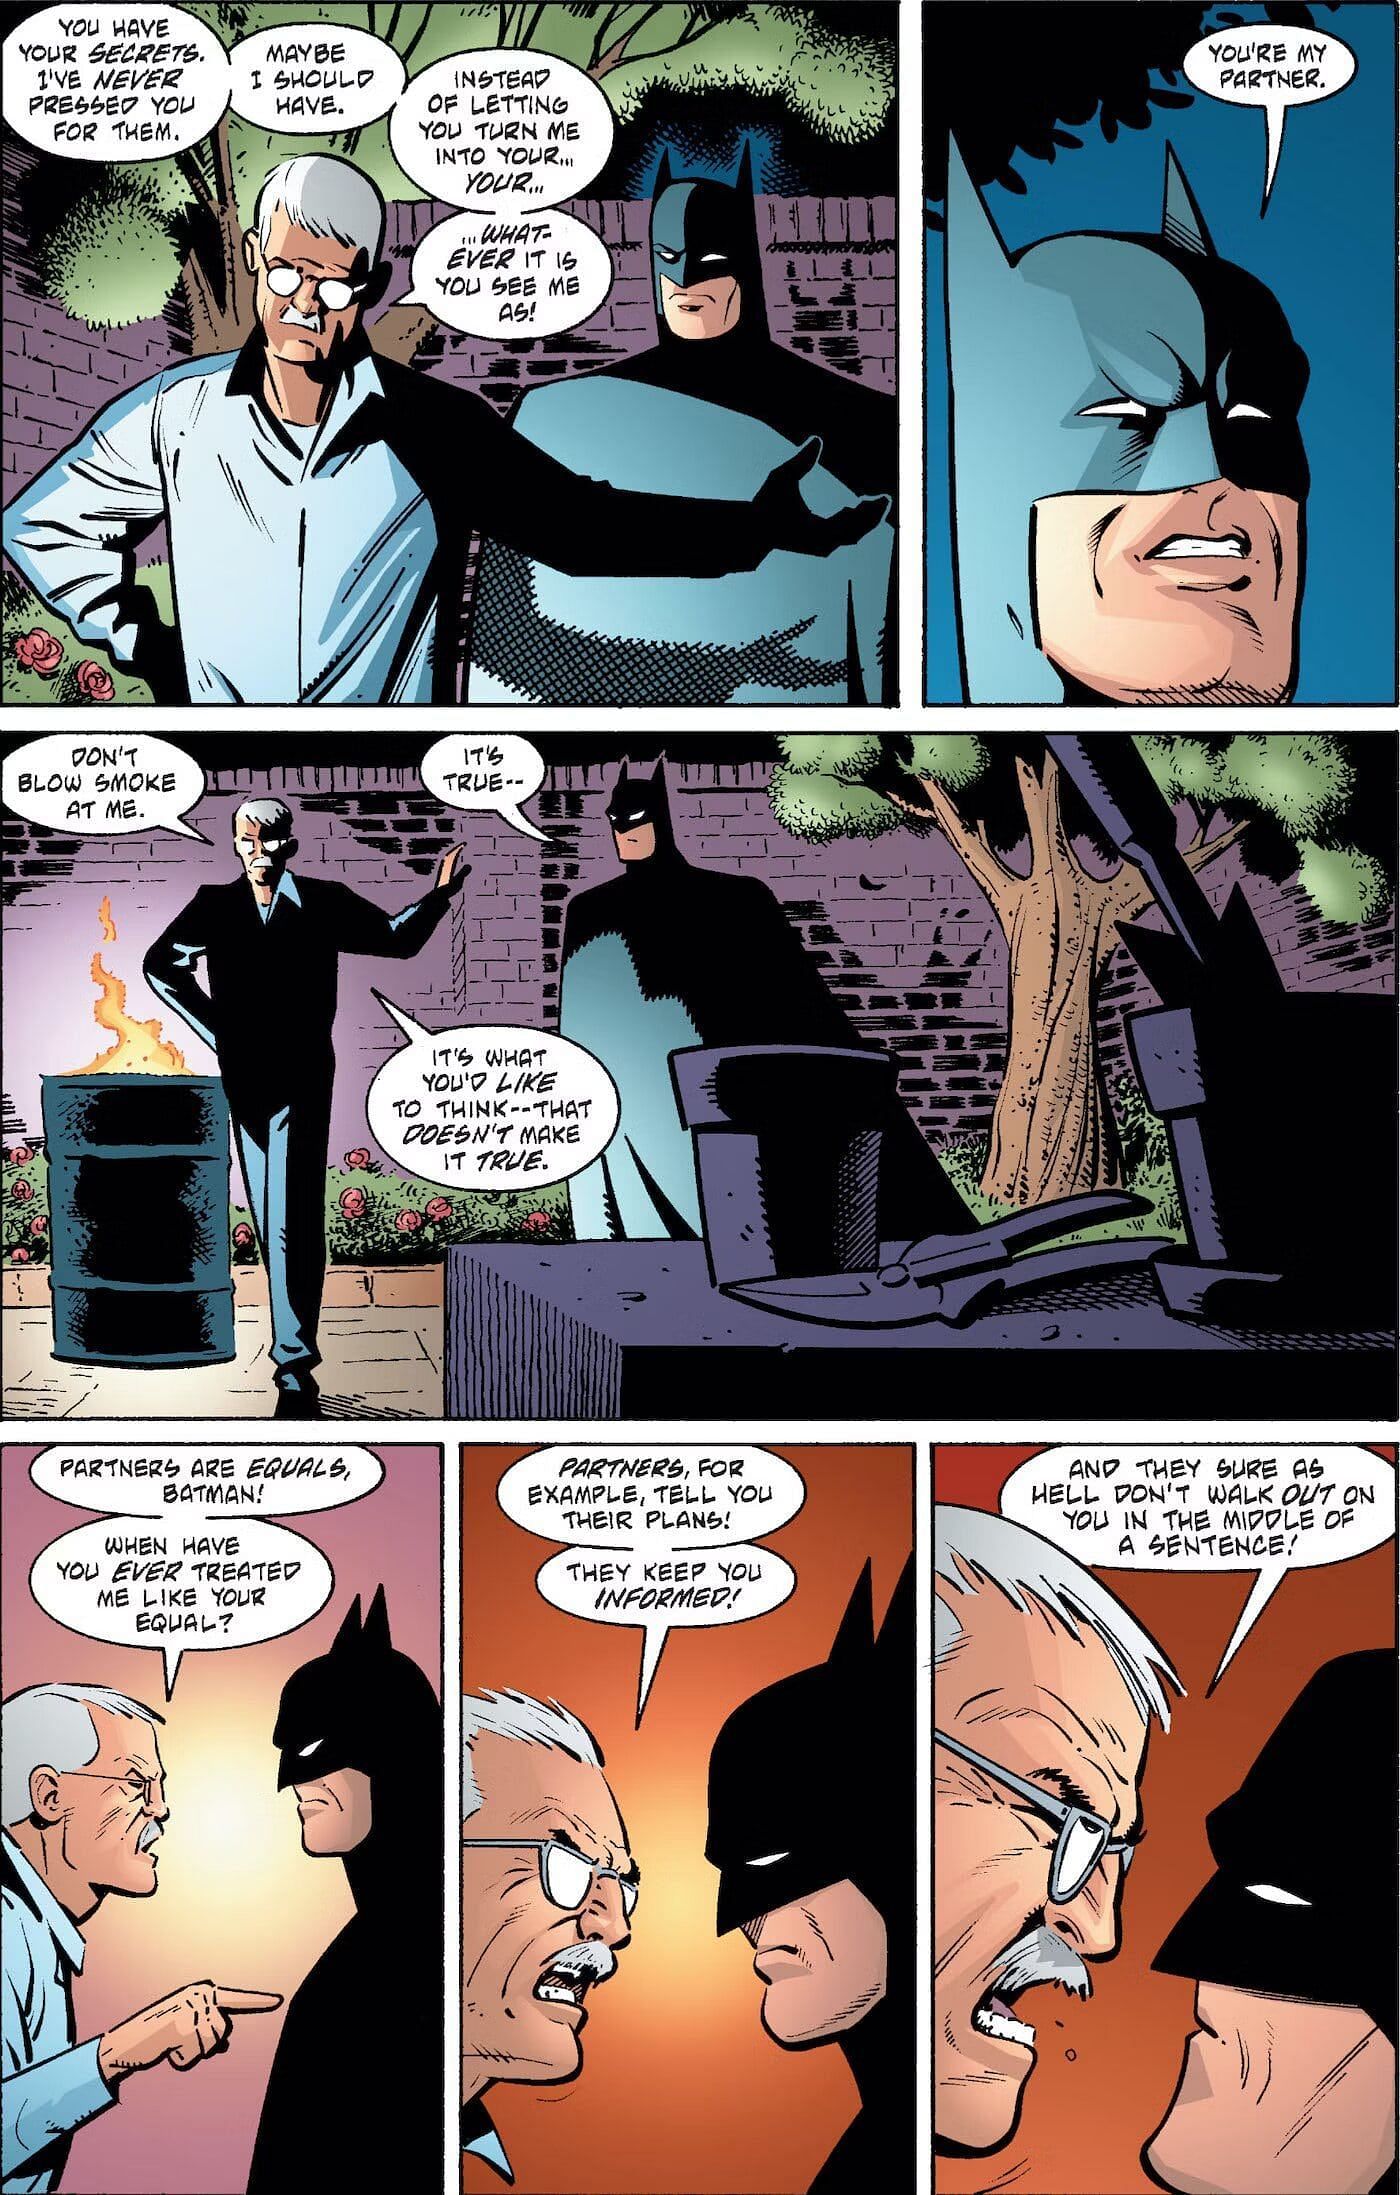 Batman's vanishing trick has a rather painful explanation